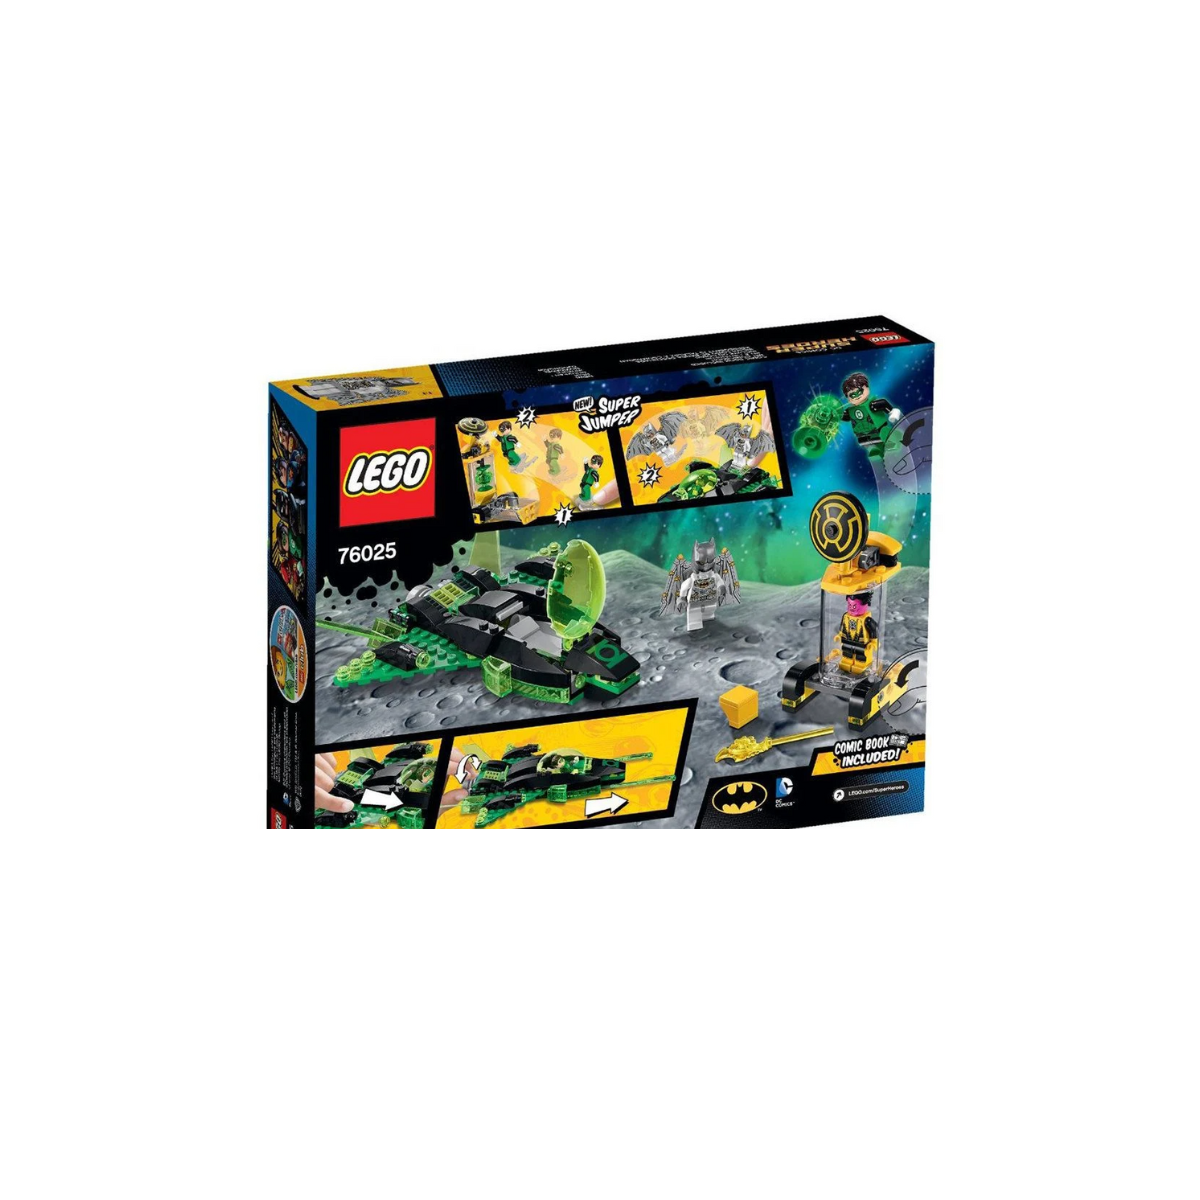 LEGO DC Comics Green Lantern vs Sinestro